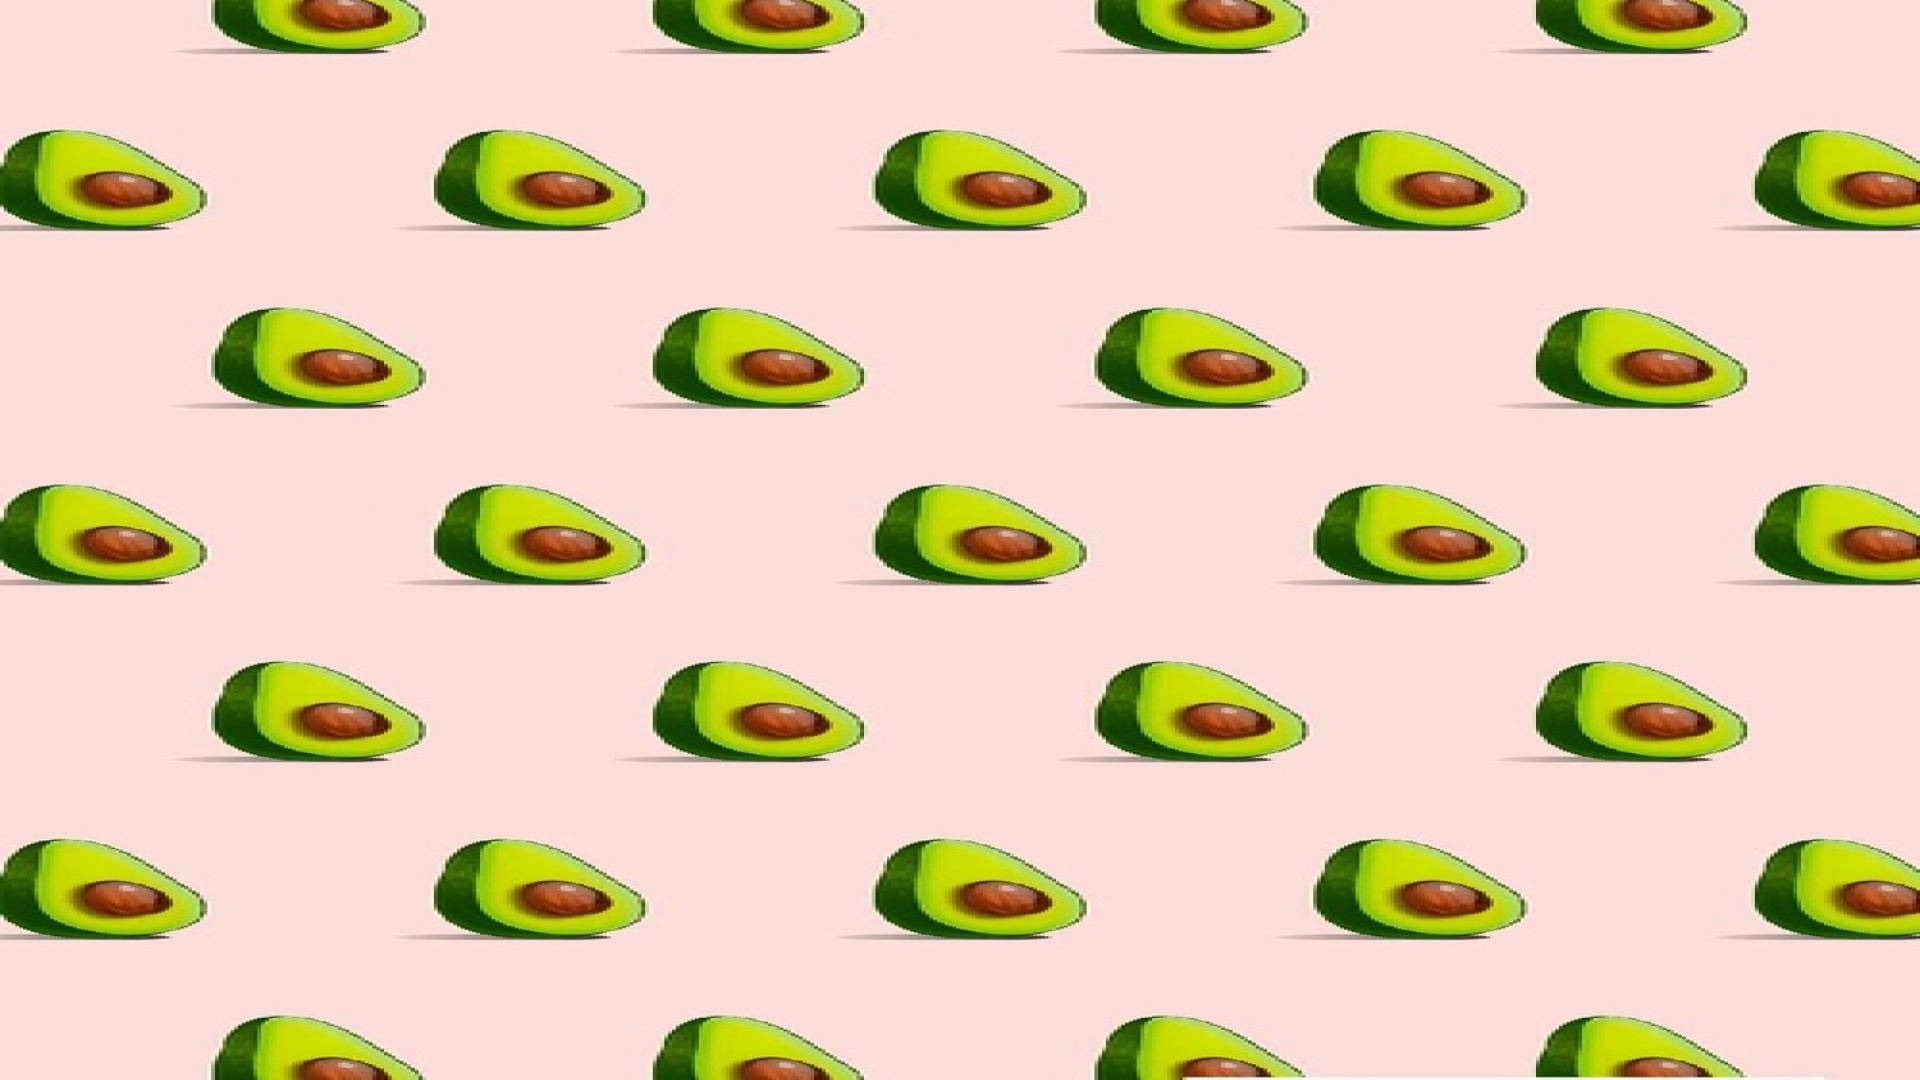 Minimalist Avocado Fruit Horizontal Patterns Digital Art Picture